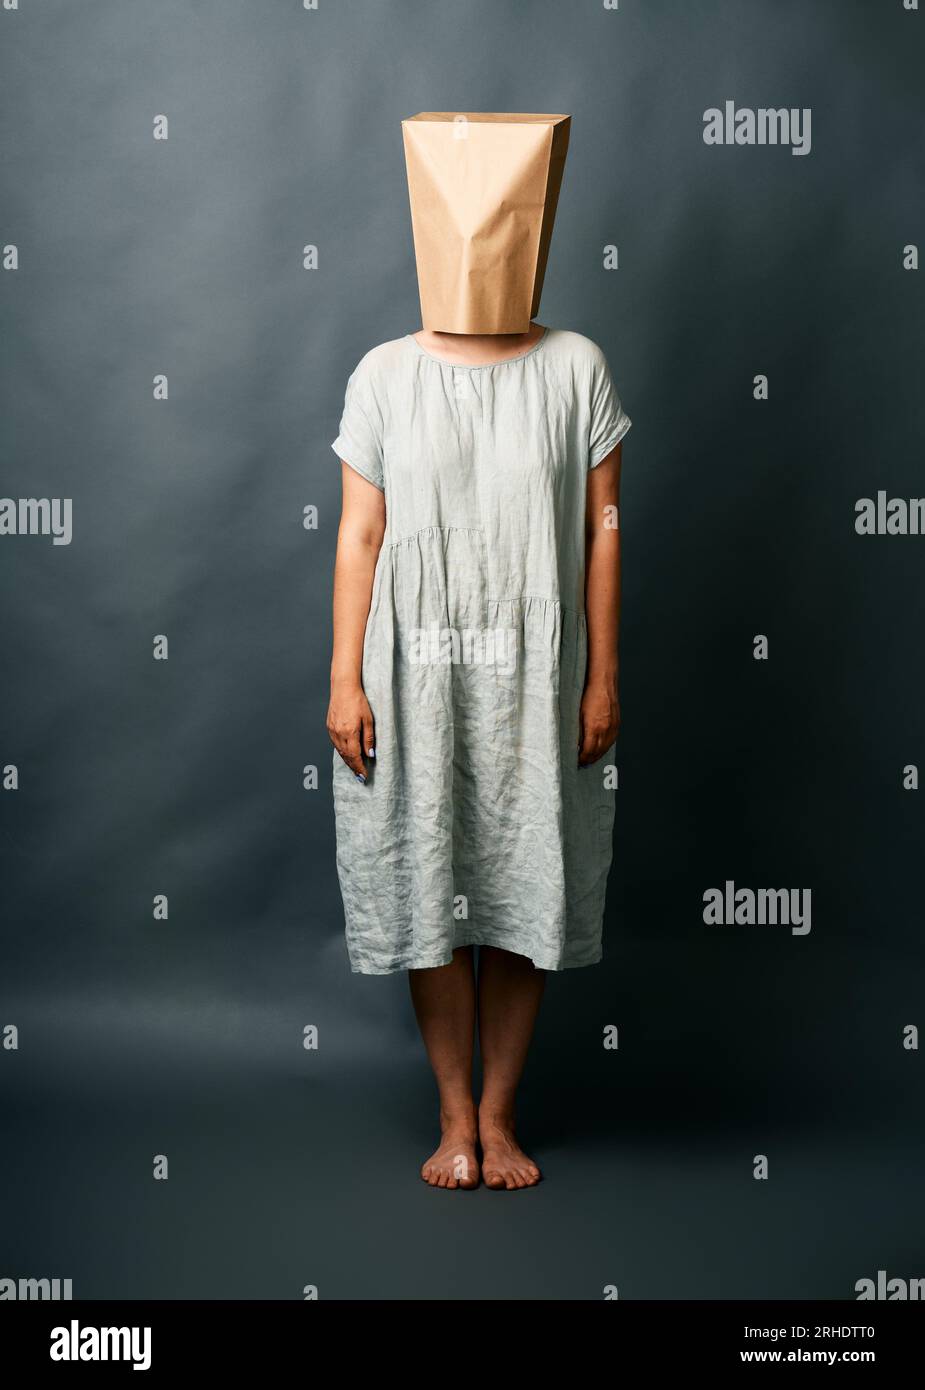 shocked paper bag girl Stock Photo - Alamy